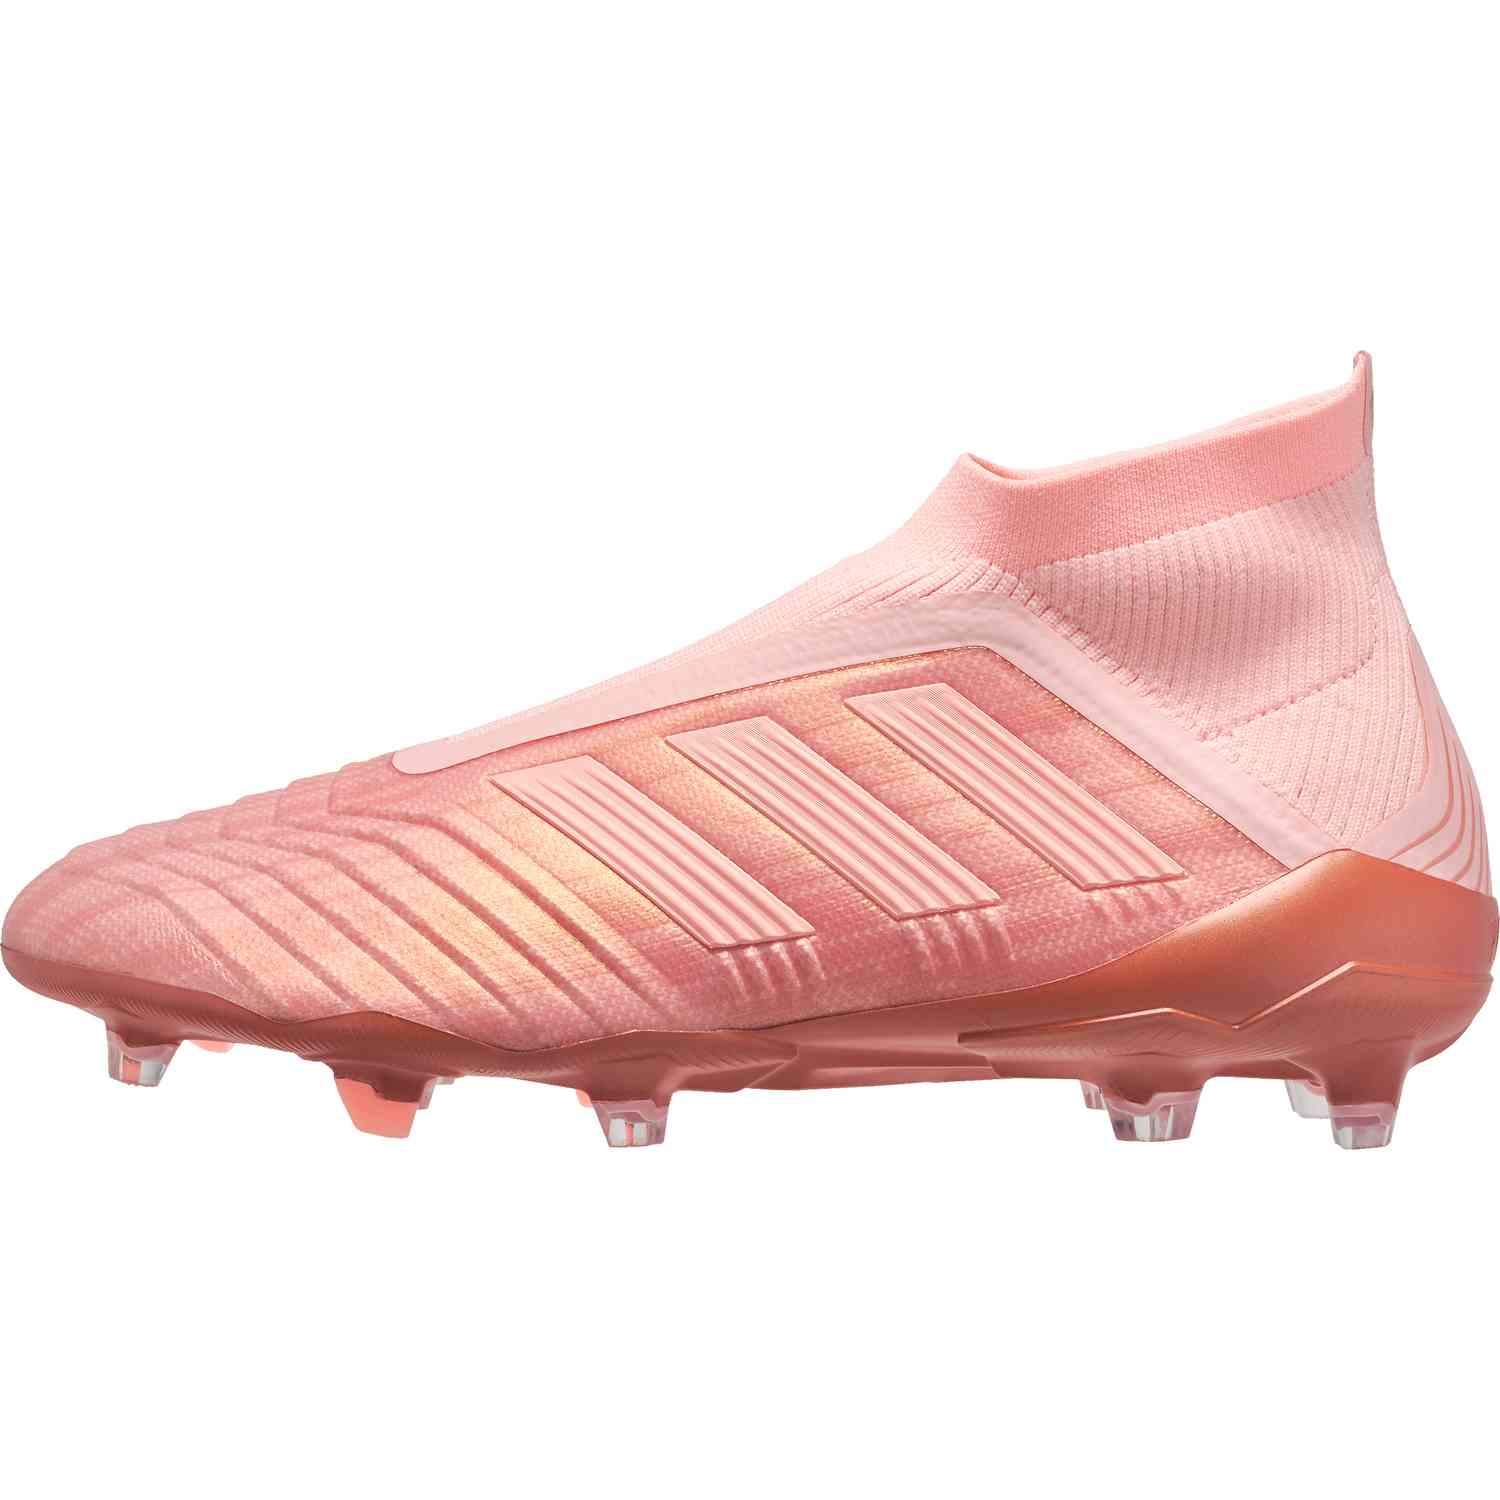 adidas predator 18 pink